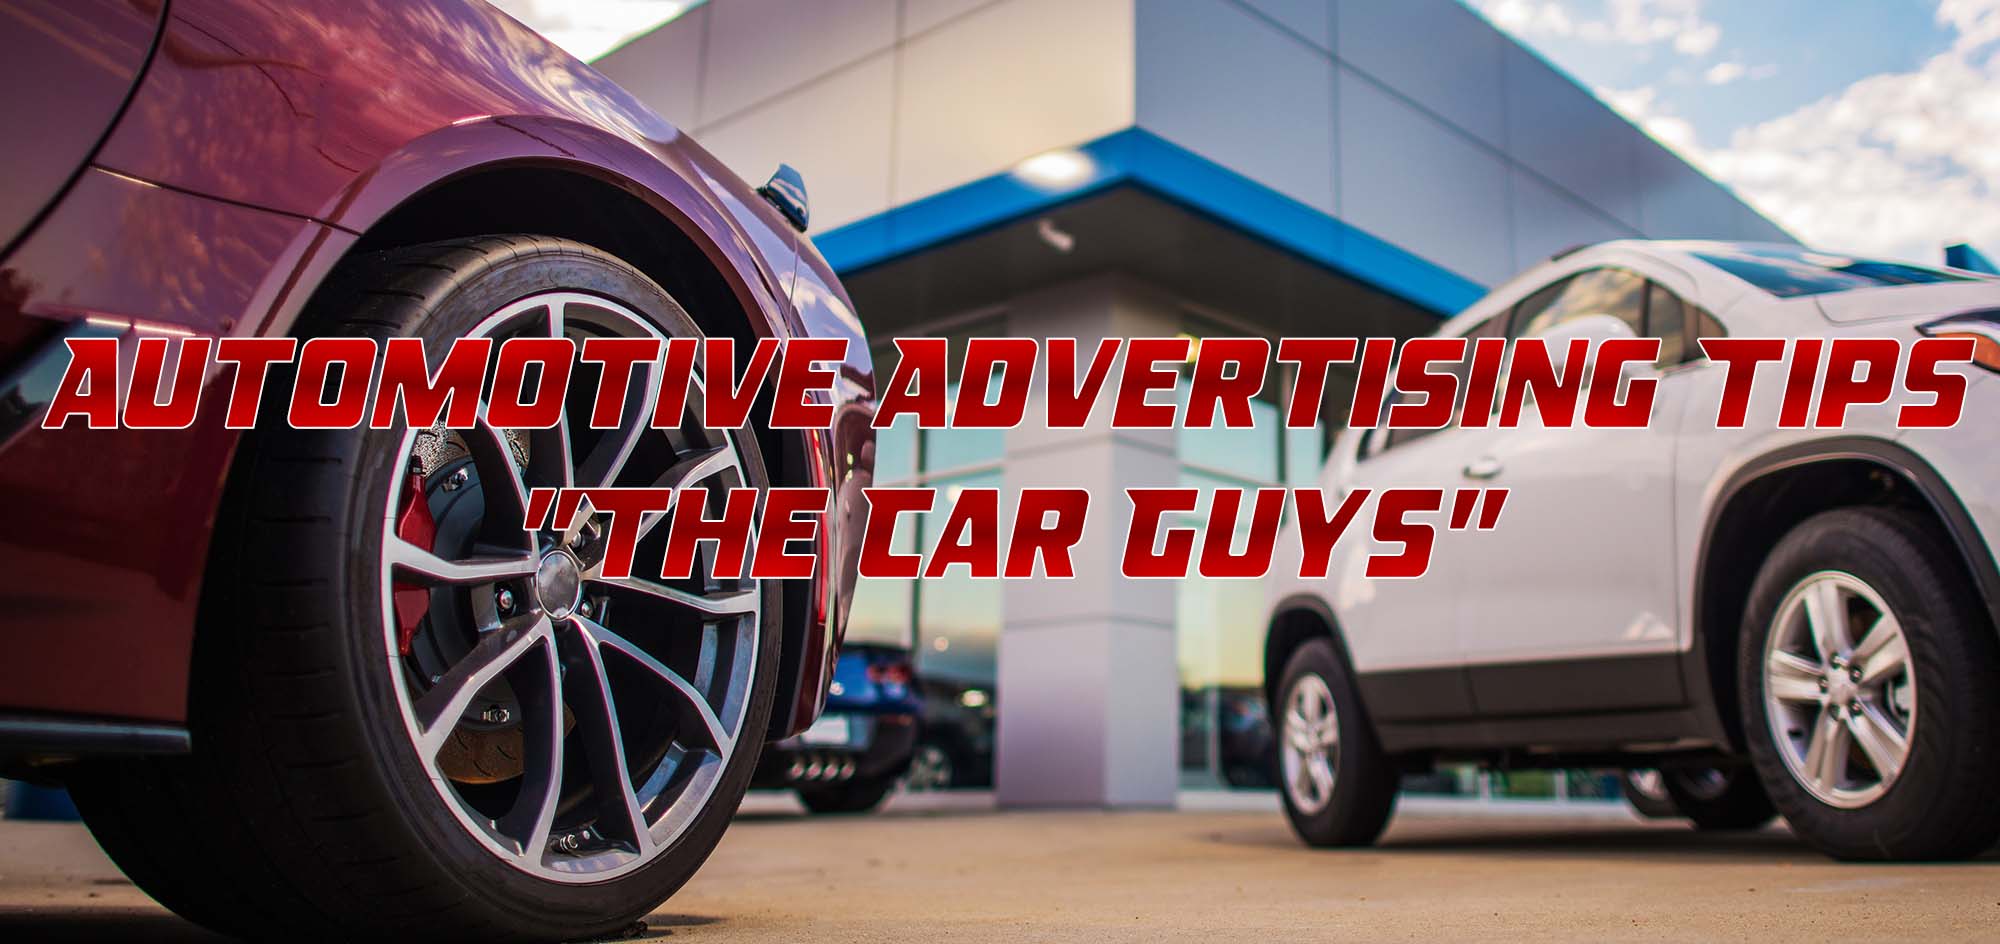 Automotive Advertising Tips